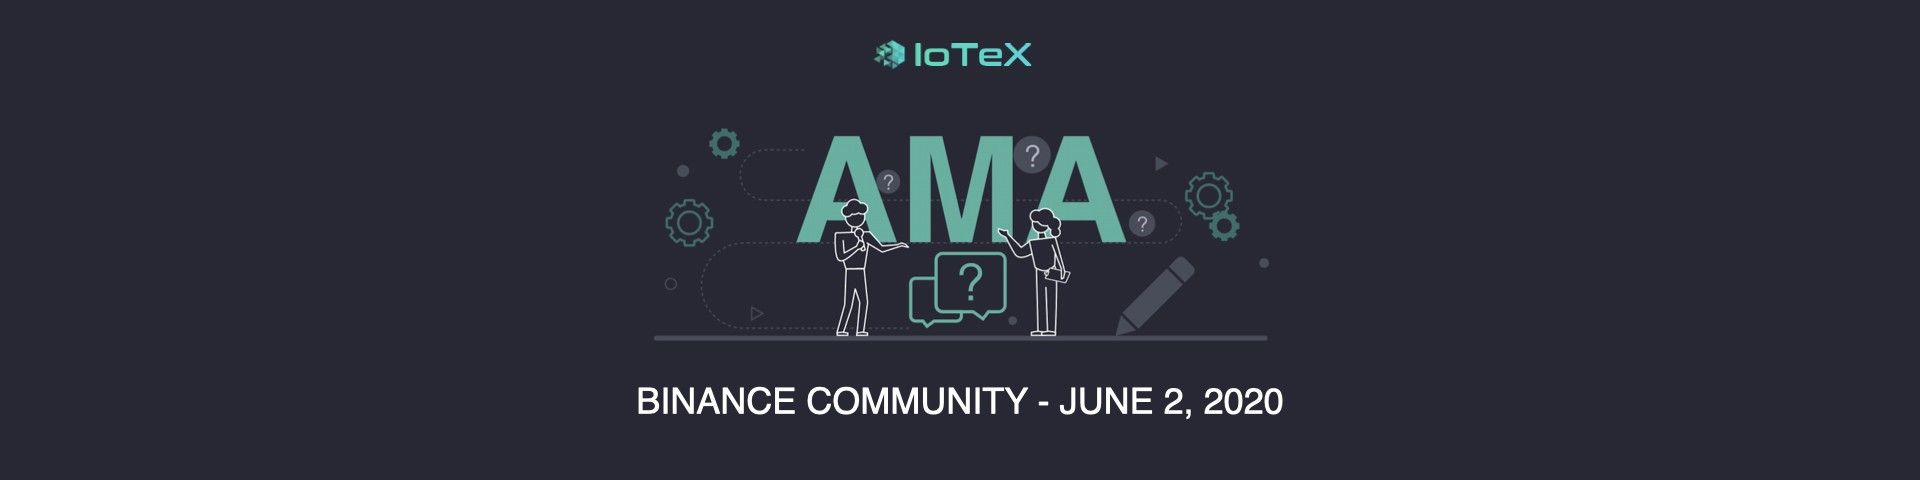 IoTeX & Binance AMA Summary — June 2, 2020